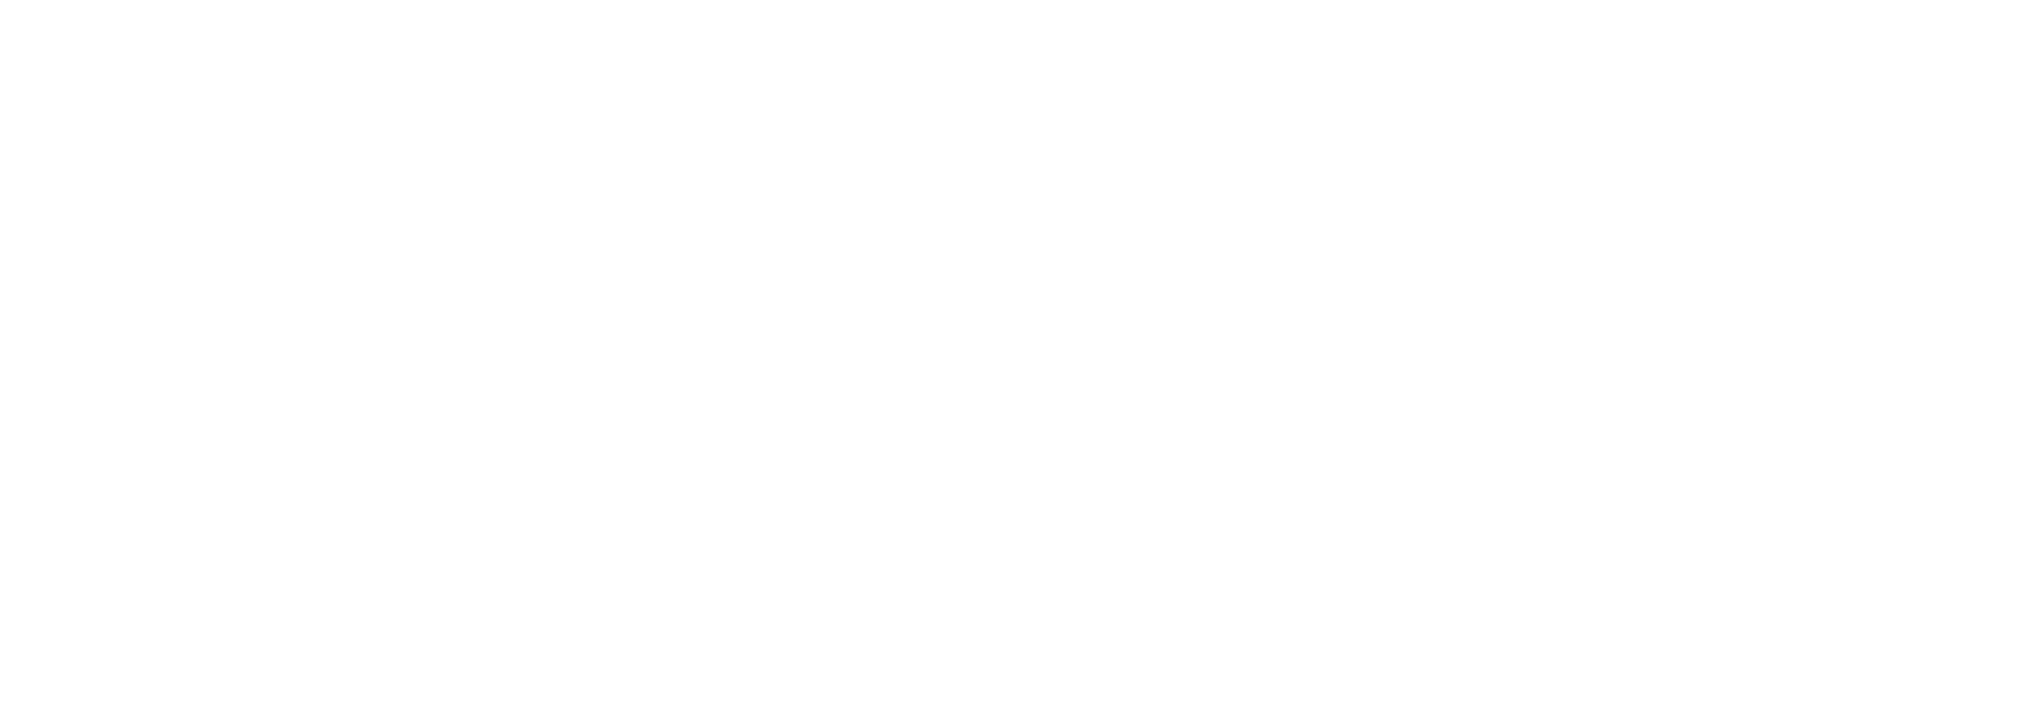 Arm Dynamics Logo Master_White